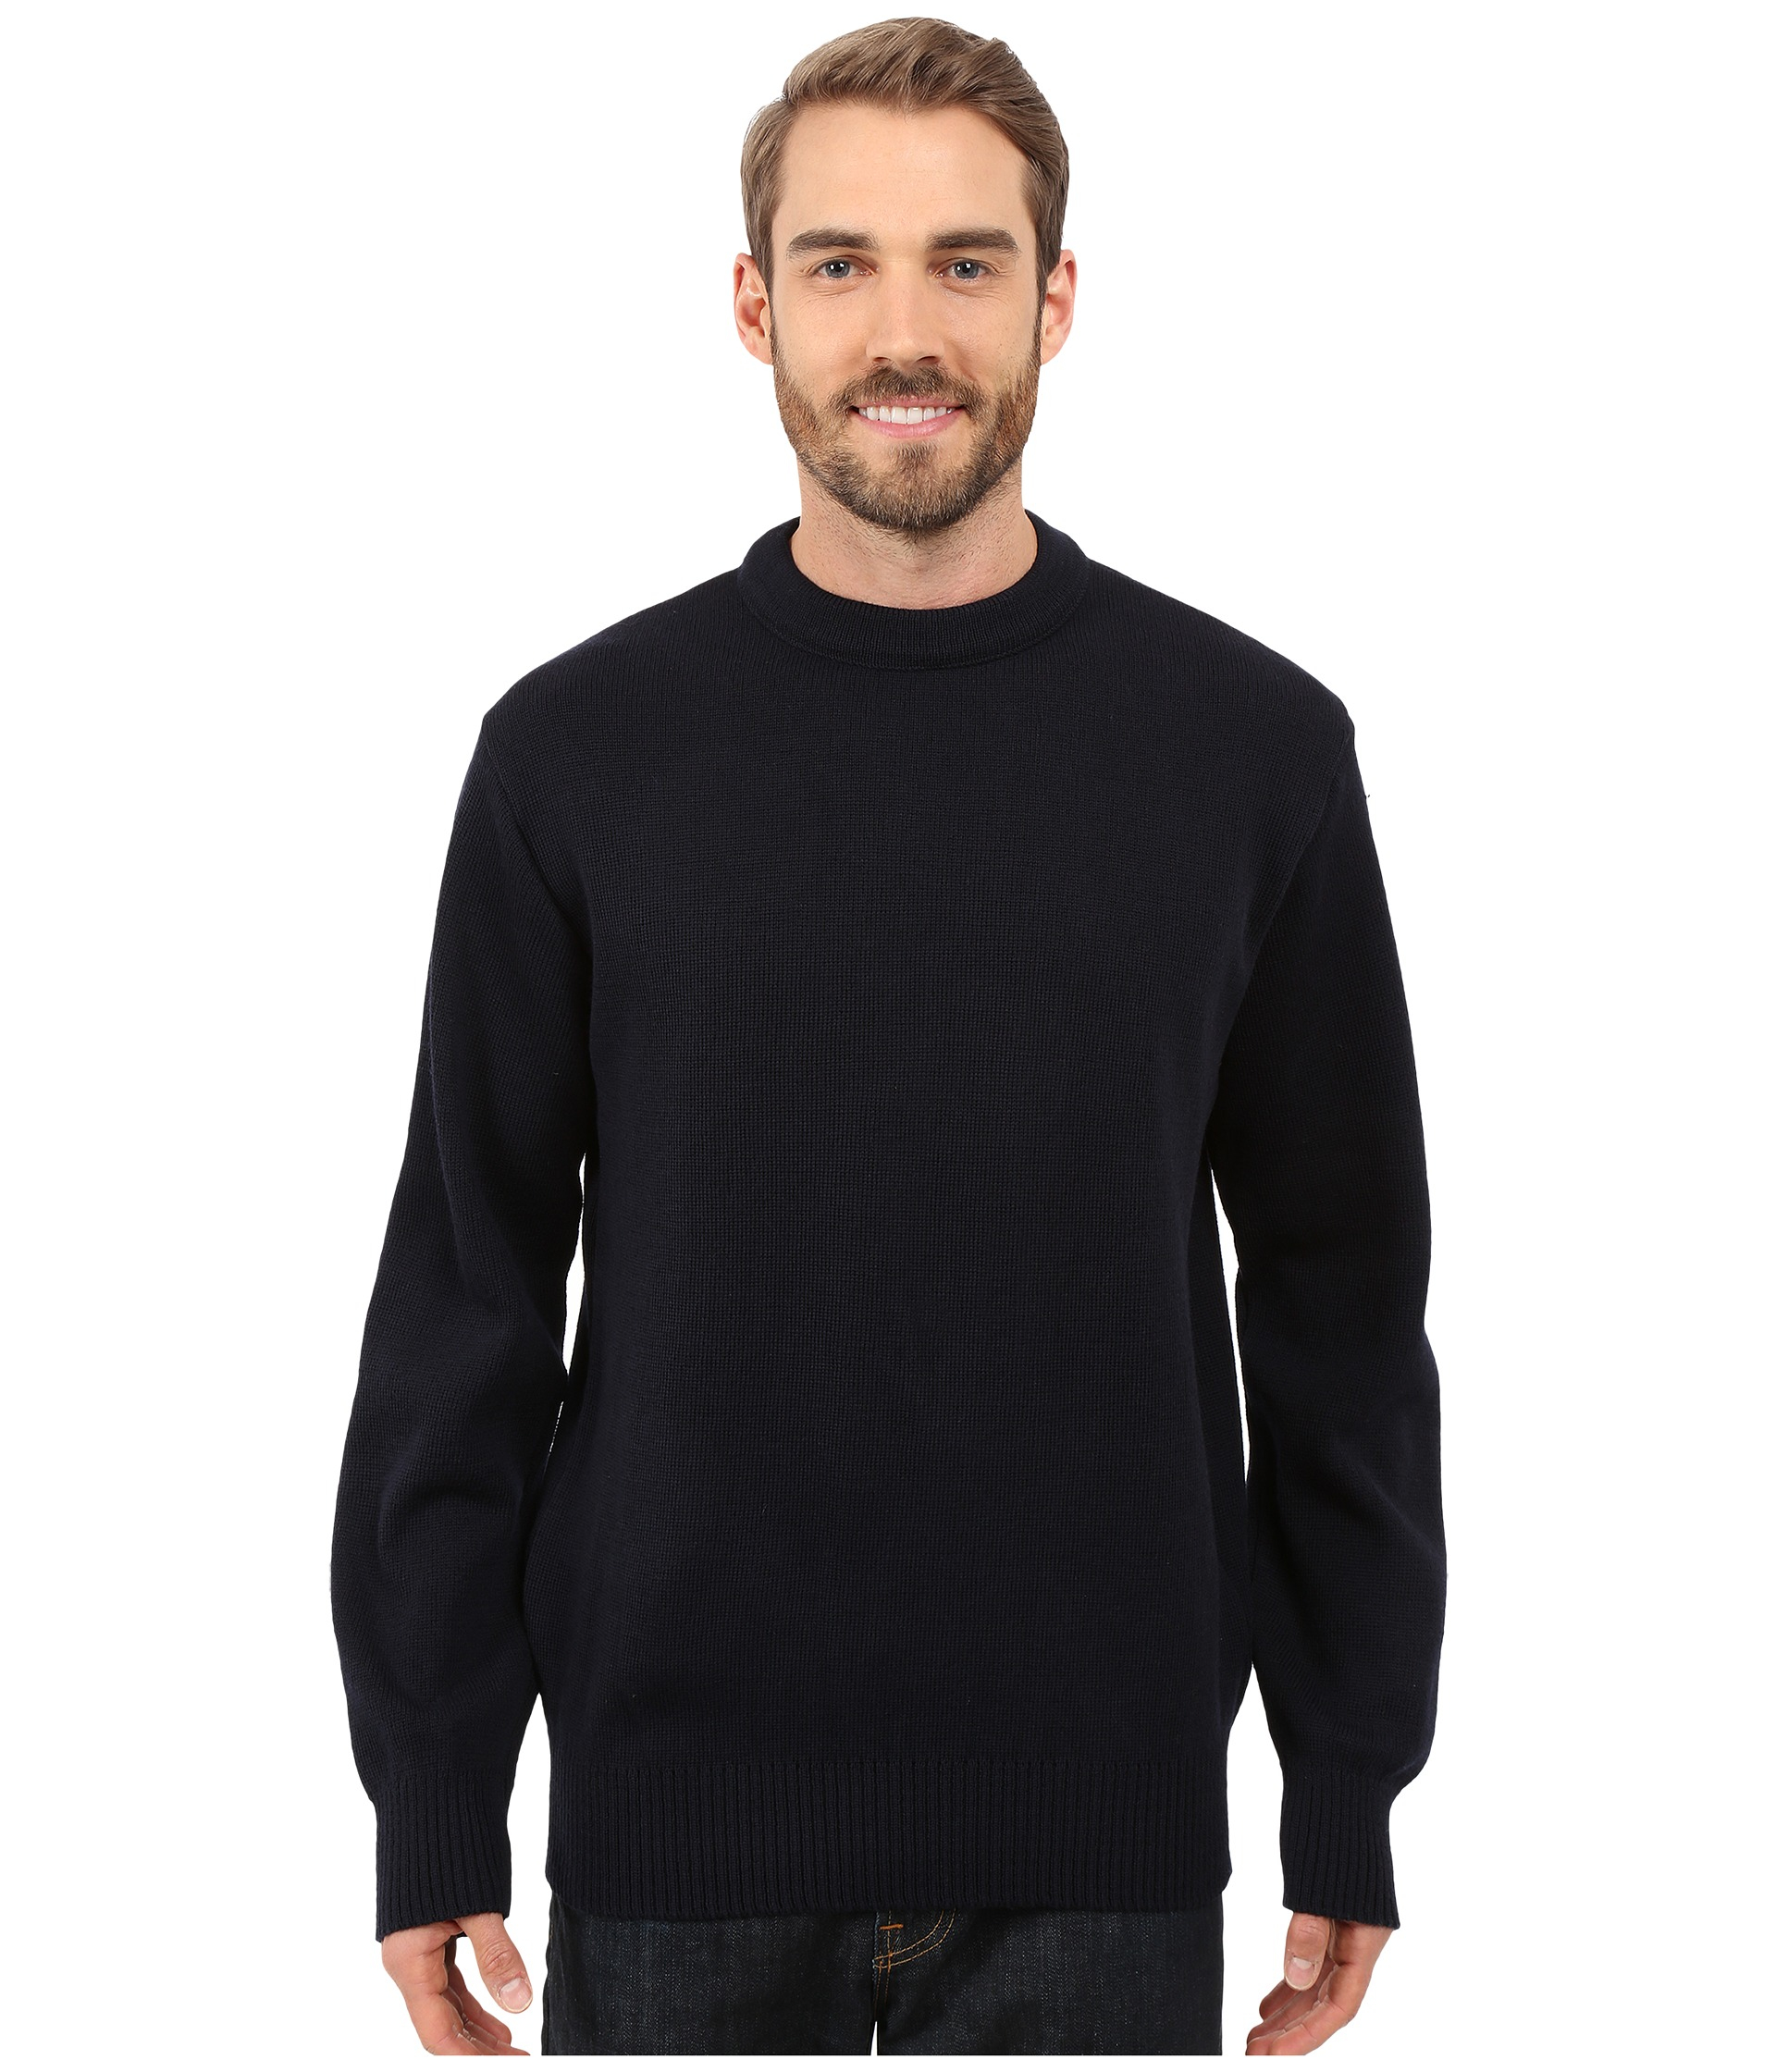 Filson Wool Crew Sweater in Navy (Black) for Men - Lyst